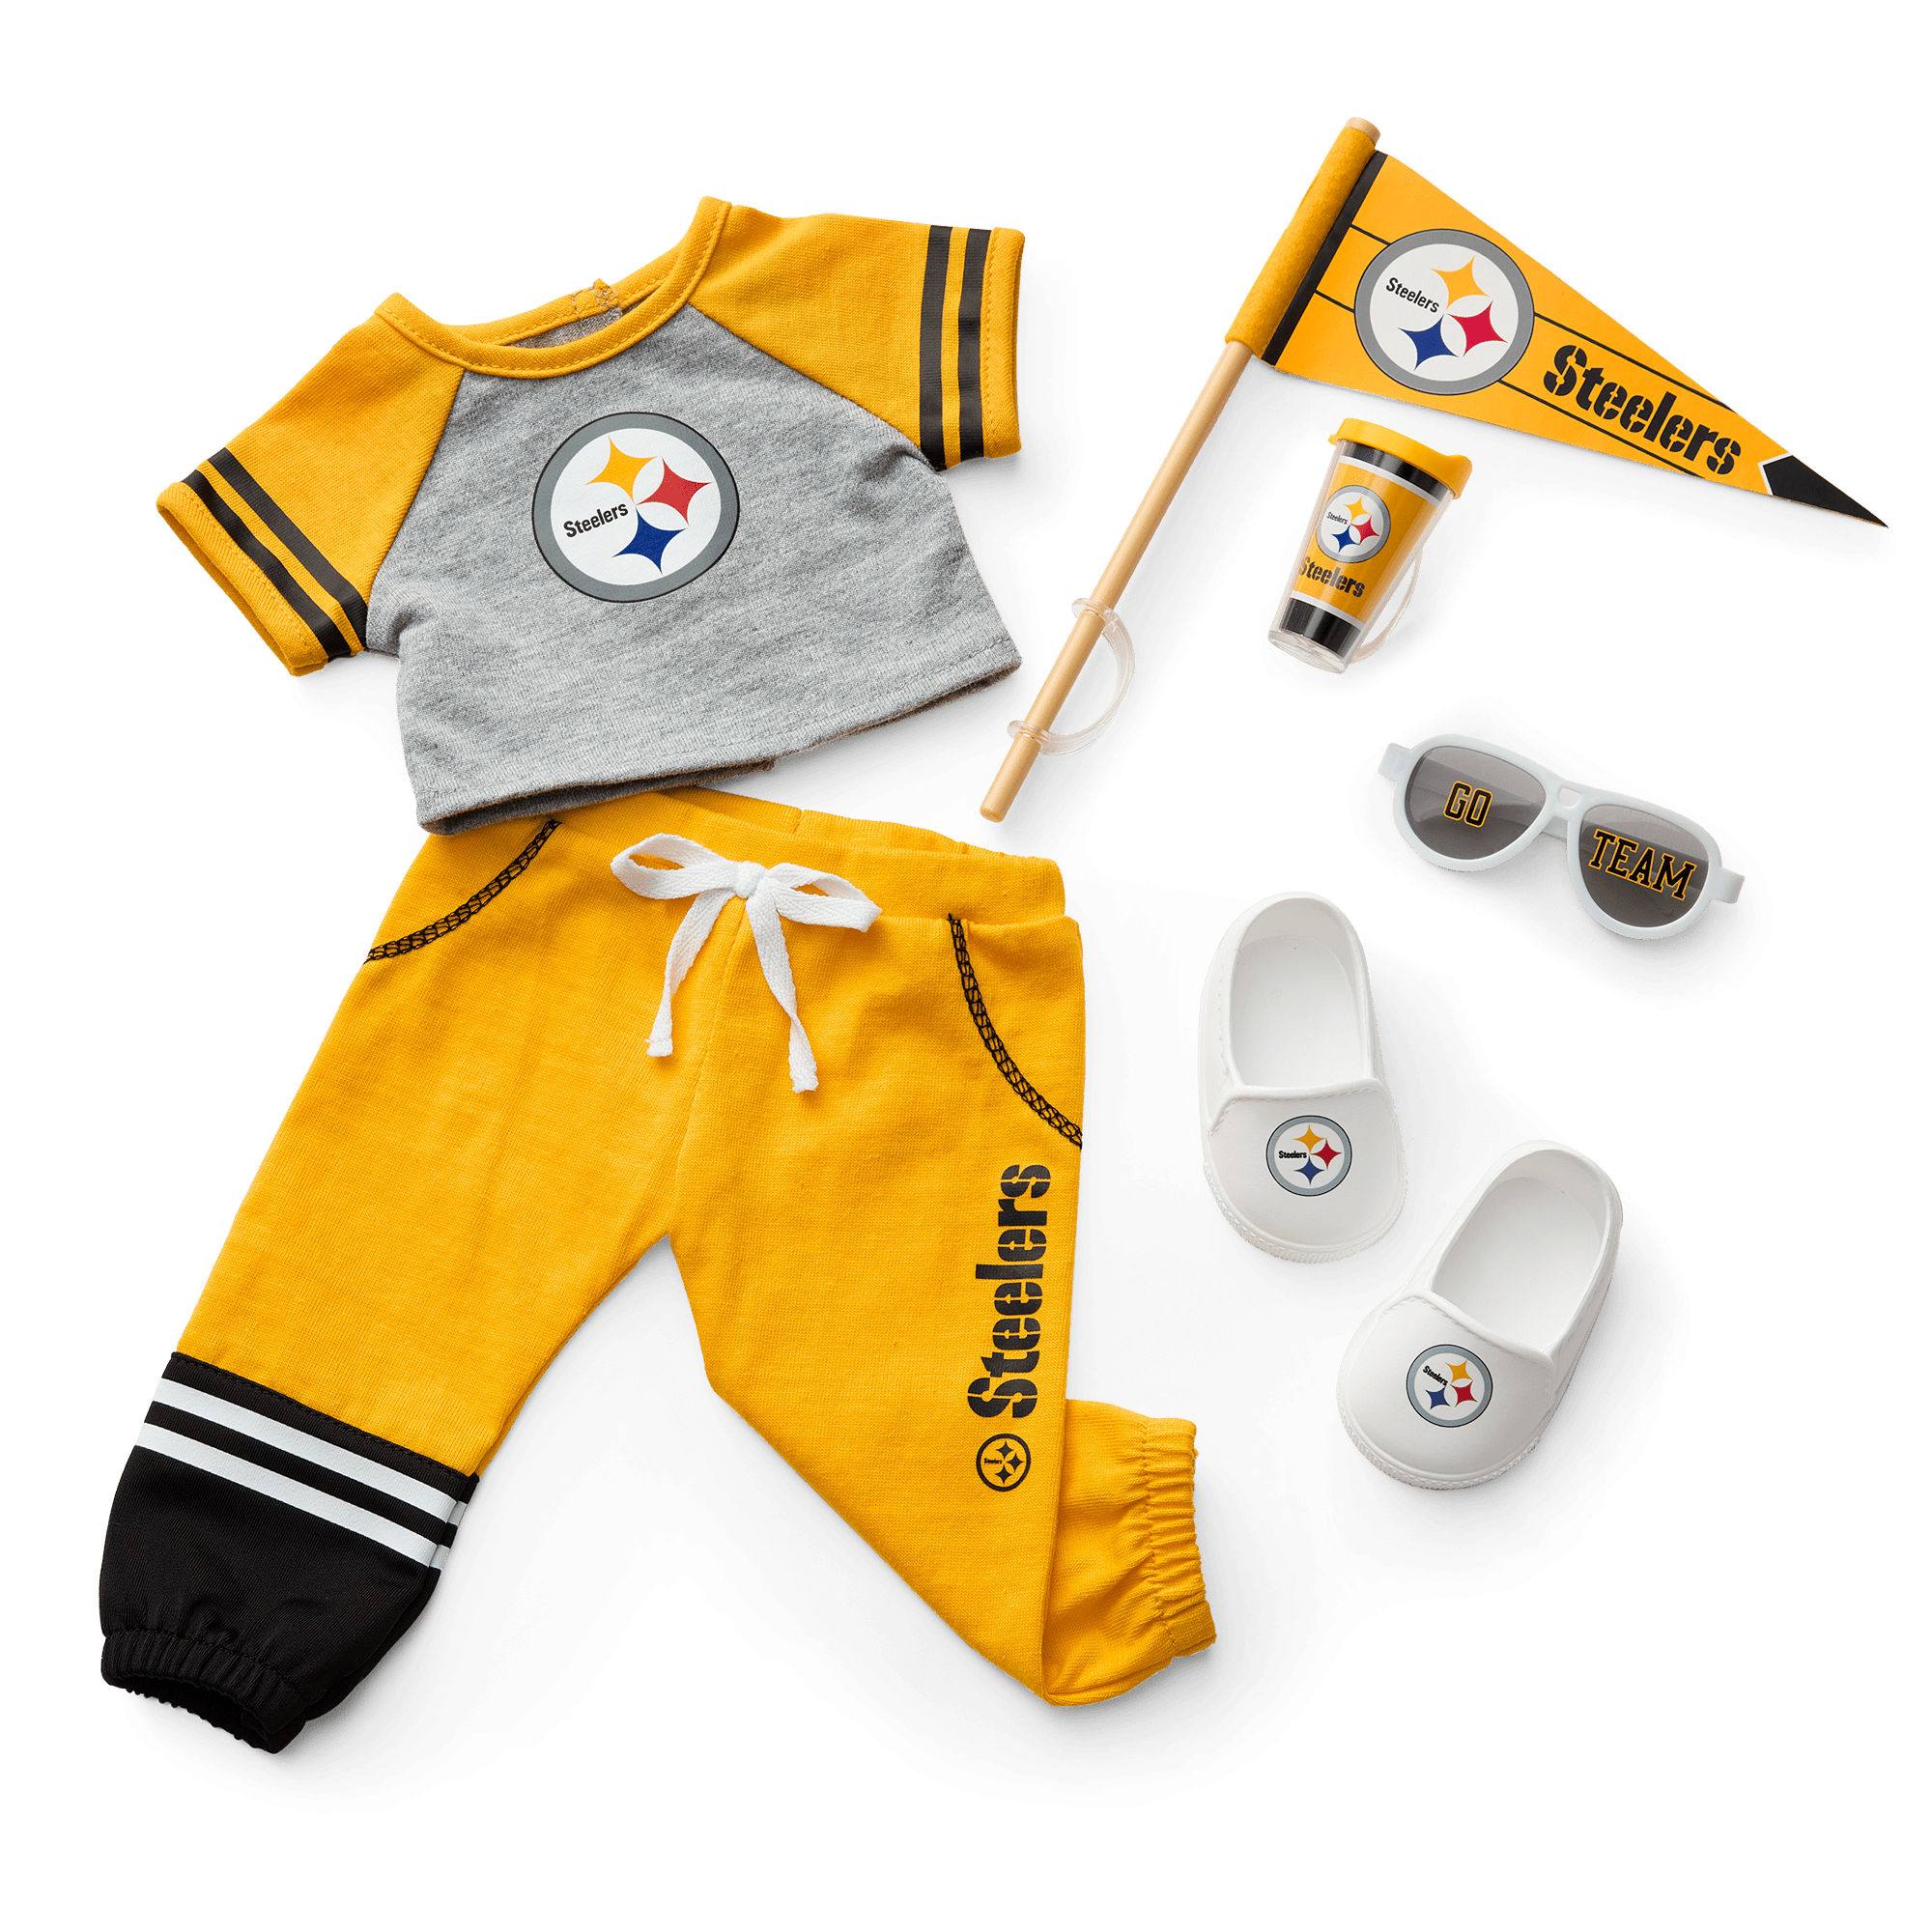 Discounted Women's Pittsburgh Steelers Gear, Cheap Womens Steelers